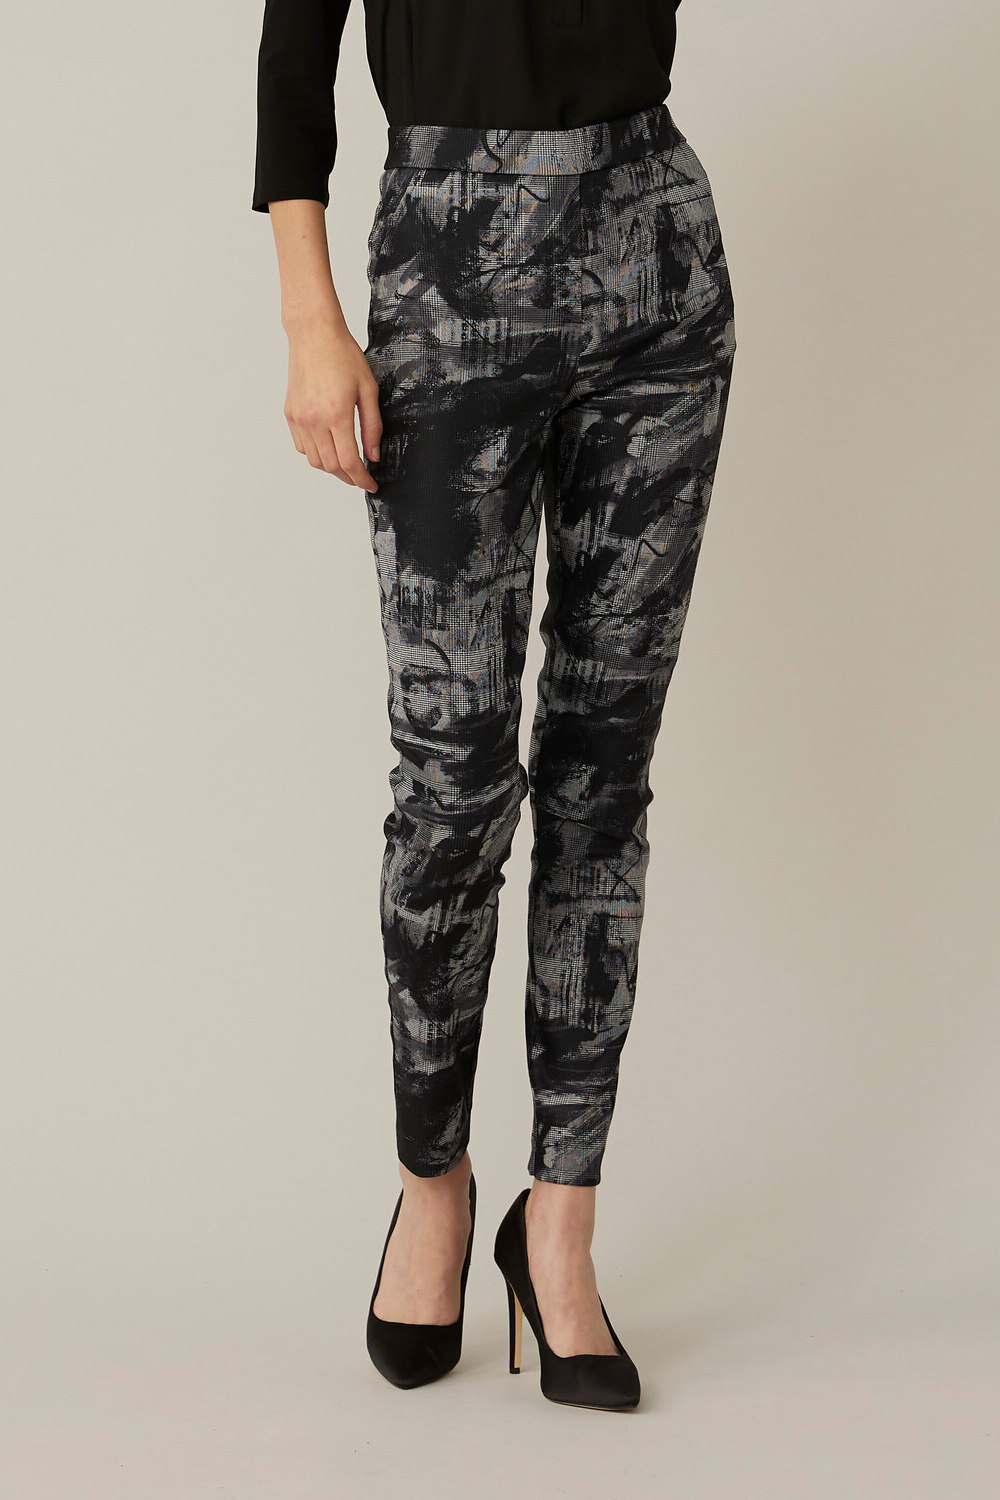 Joseph Ribkoff Pantalon Style 221136. Noir/gris/blanc